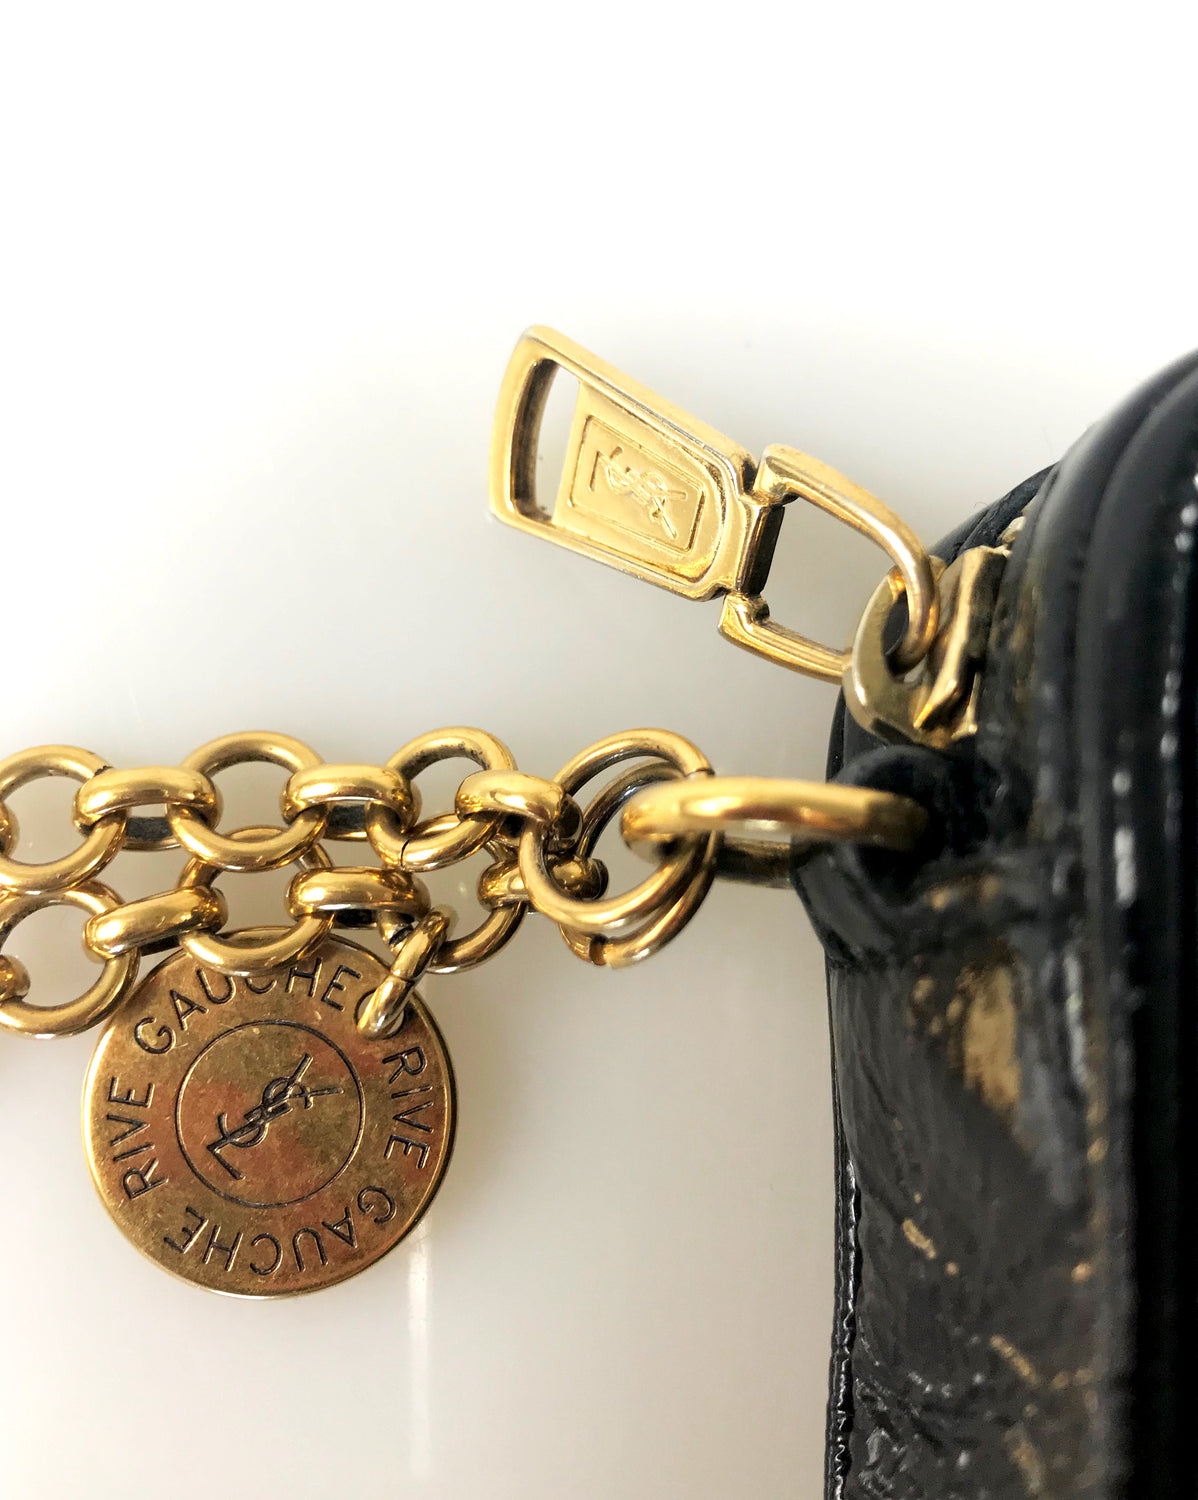 Yves Saint Laurent Patent Leather Wristlet